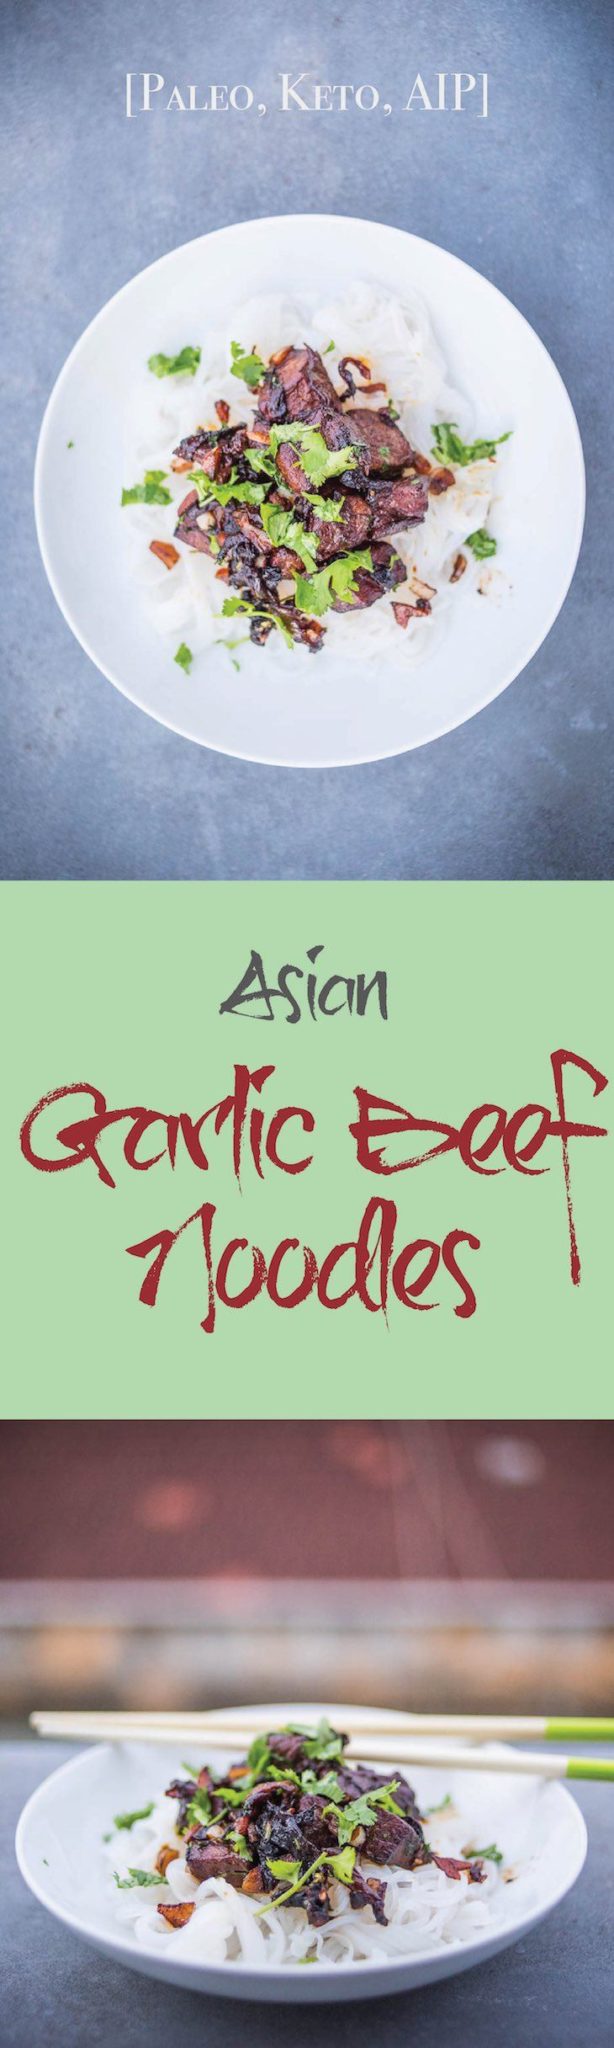 Asian Garlic Beef Noodles Recipe [Paleo, Keto, AIP] #paleo #keto #aip #recipe https://paleoflourish.com/asian-garlic-beef-noodles-recipe